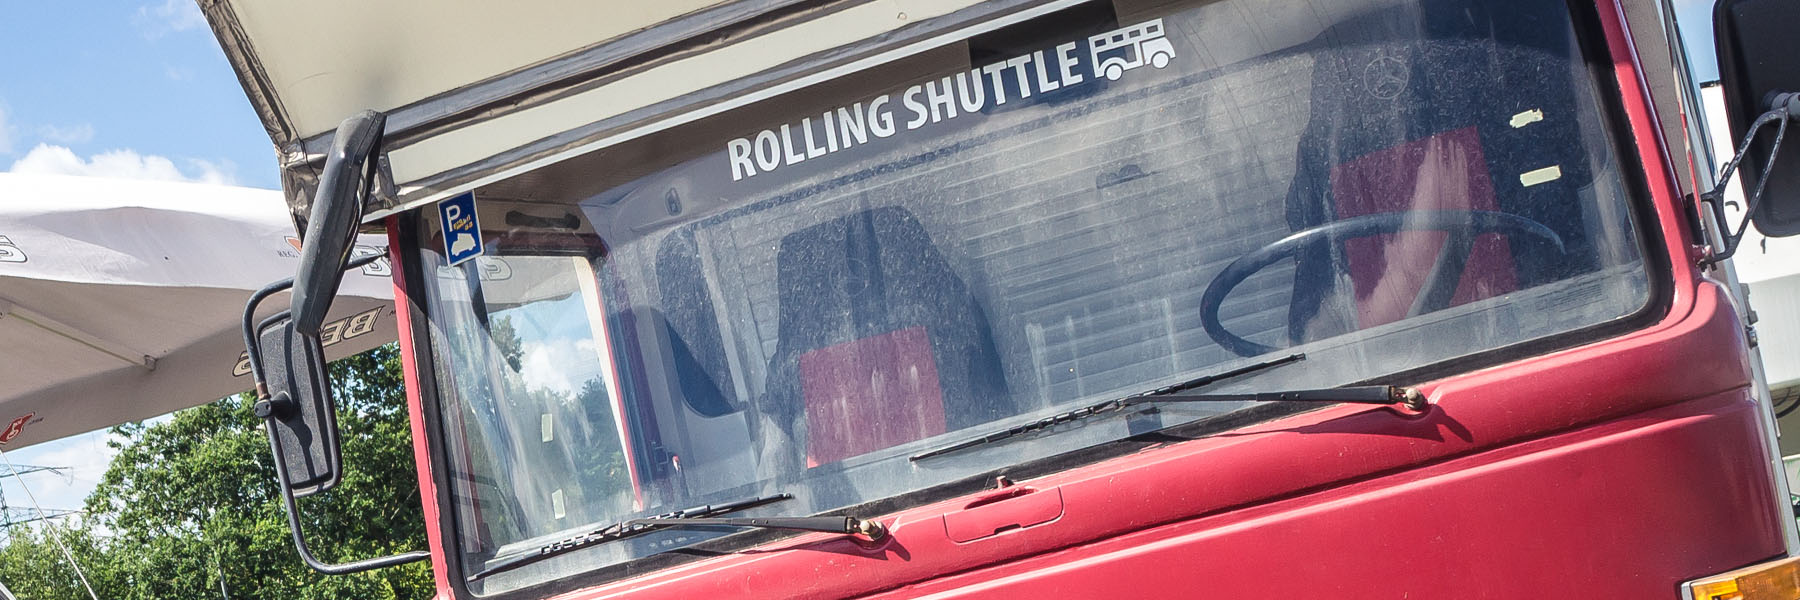 Rolling Shuttle, Impressum, Headimg